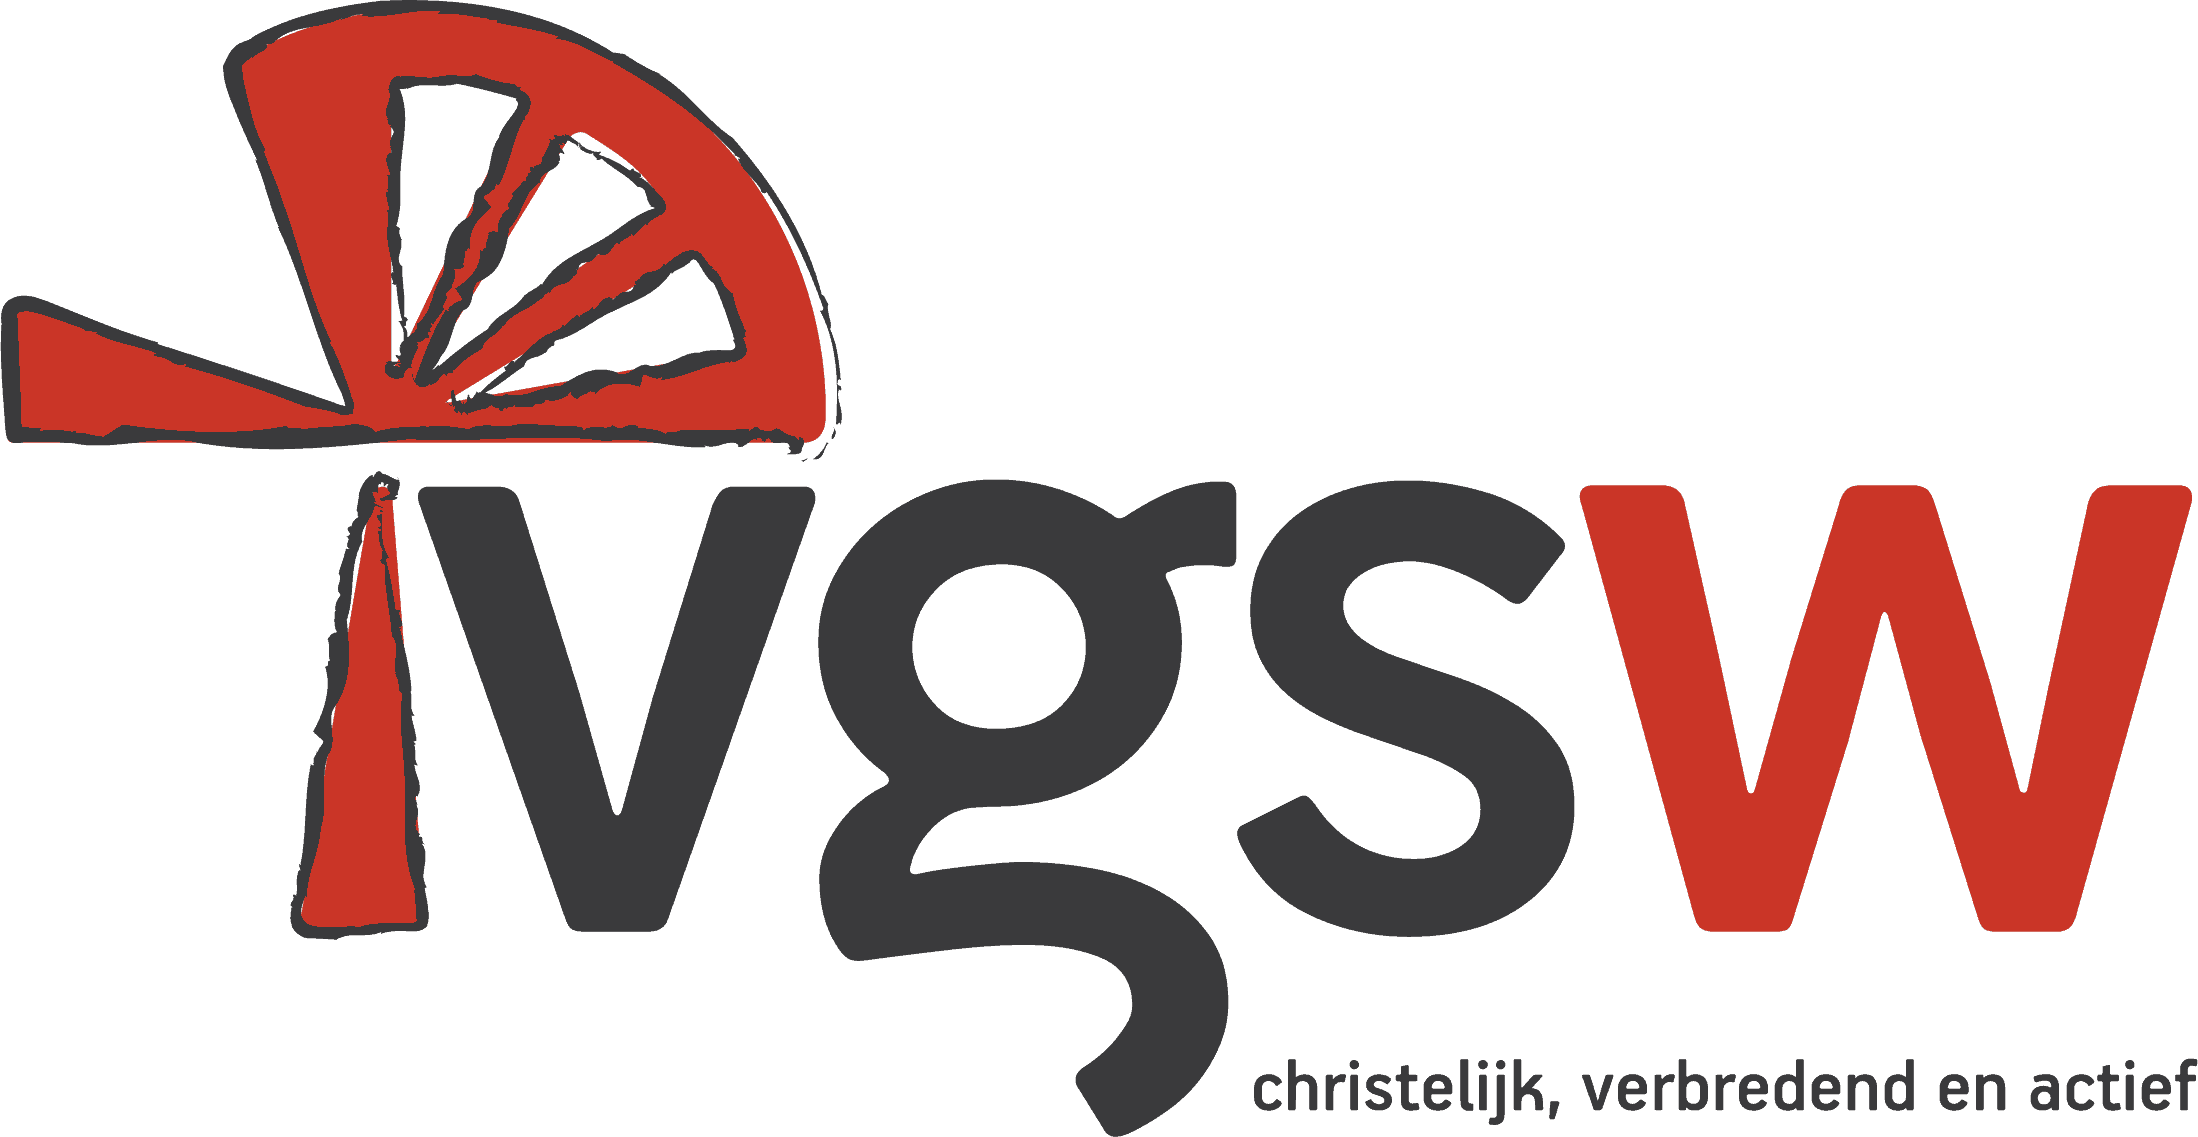 VGSW